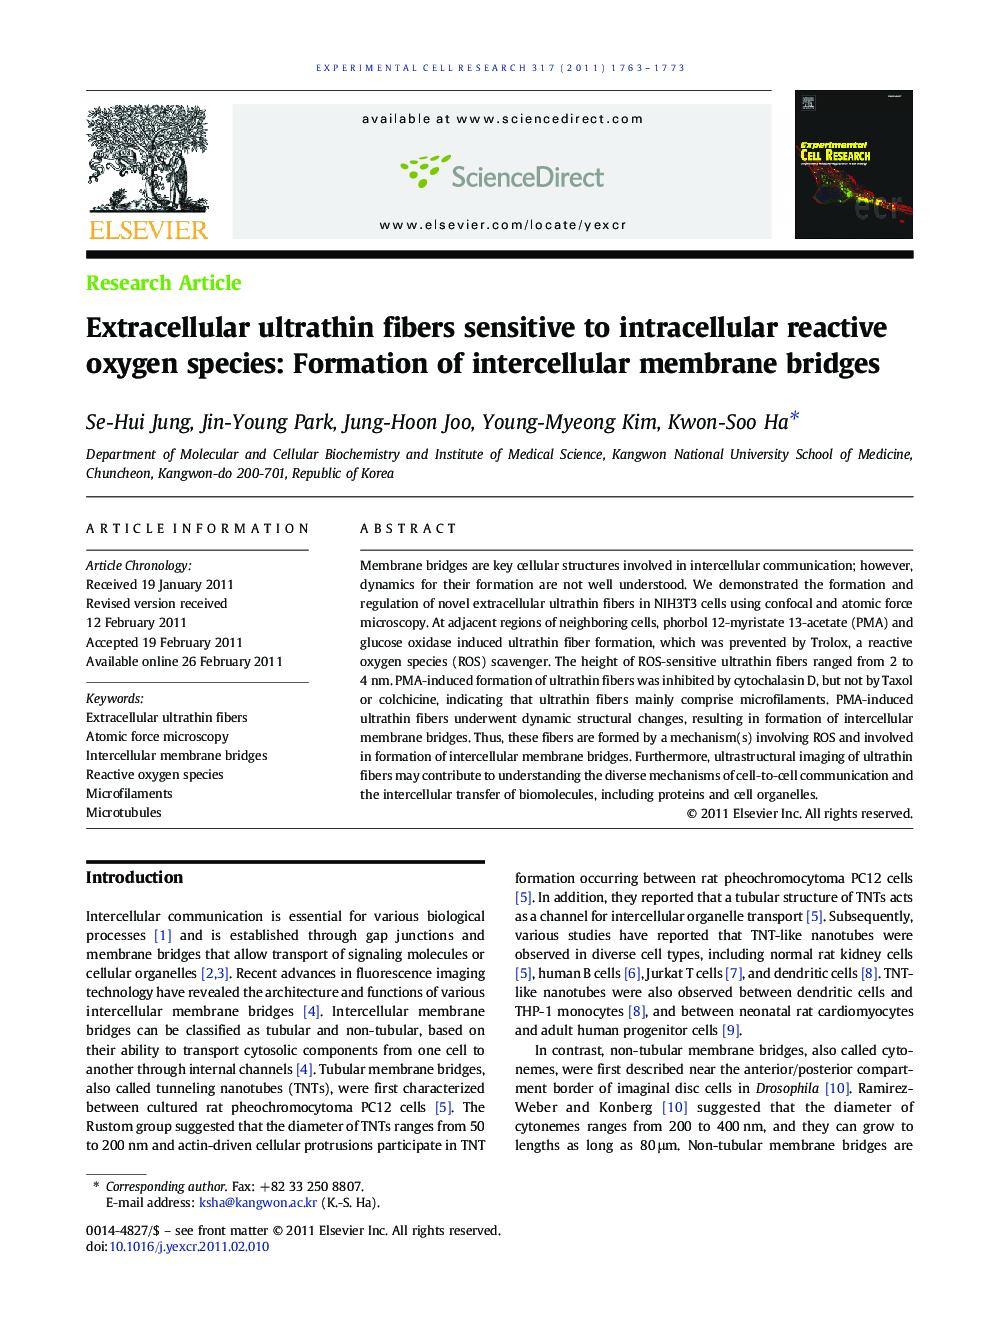 Extracellular ultrathin fibers sensitive to intracellular reactive oxygen species: Formation of intercellular membrane bridges